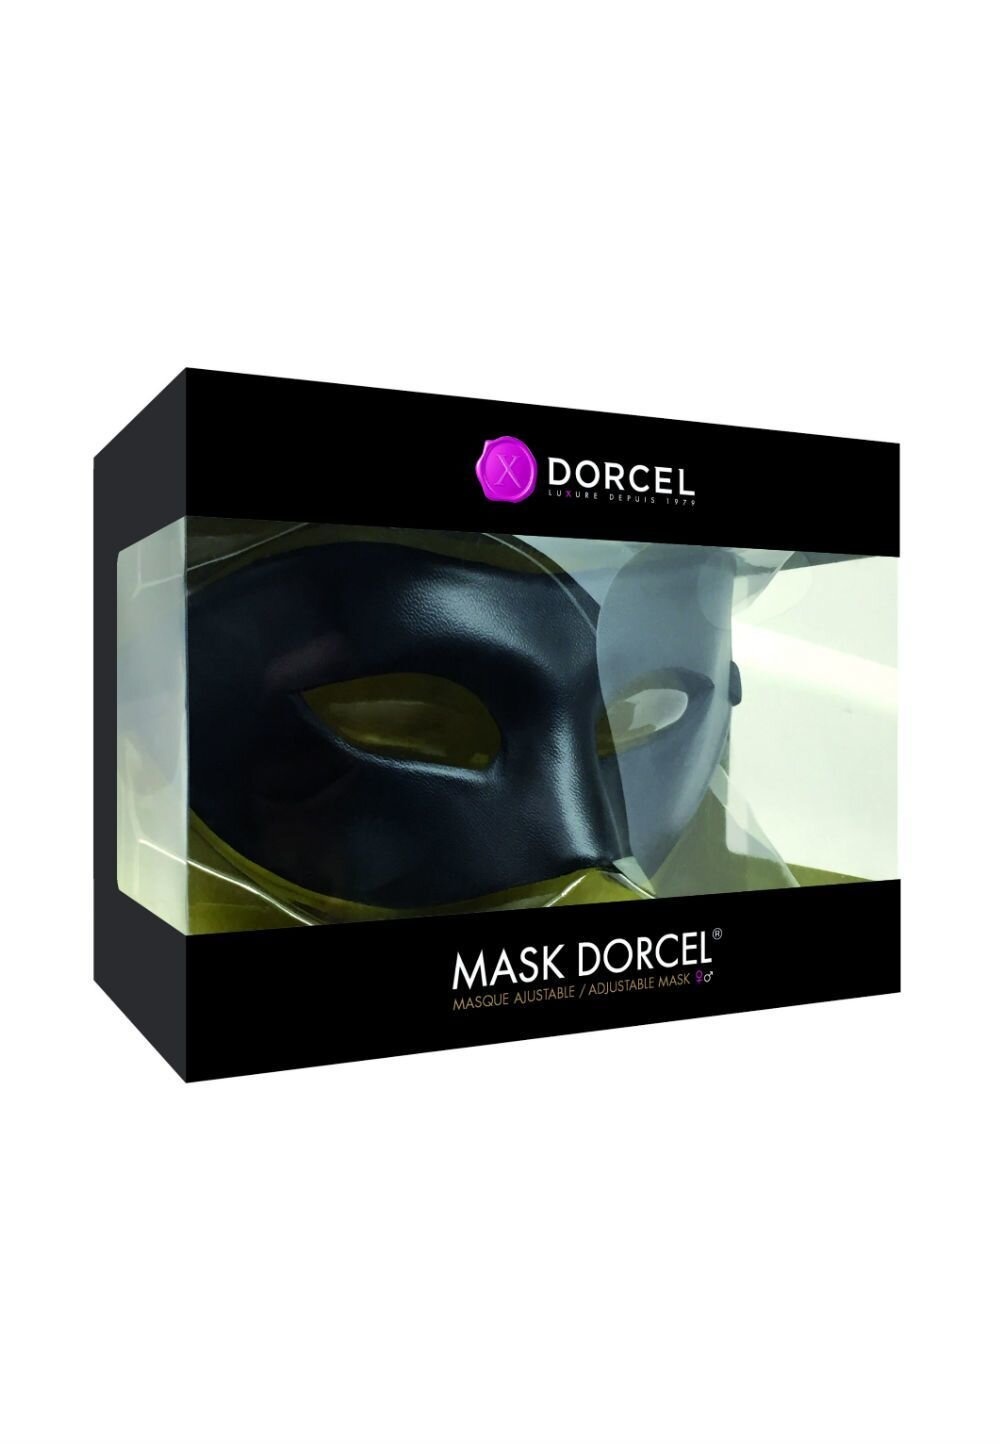 Маска на лицо Dorcel - MASK DORCEL, формованная экокожа фото